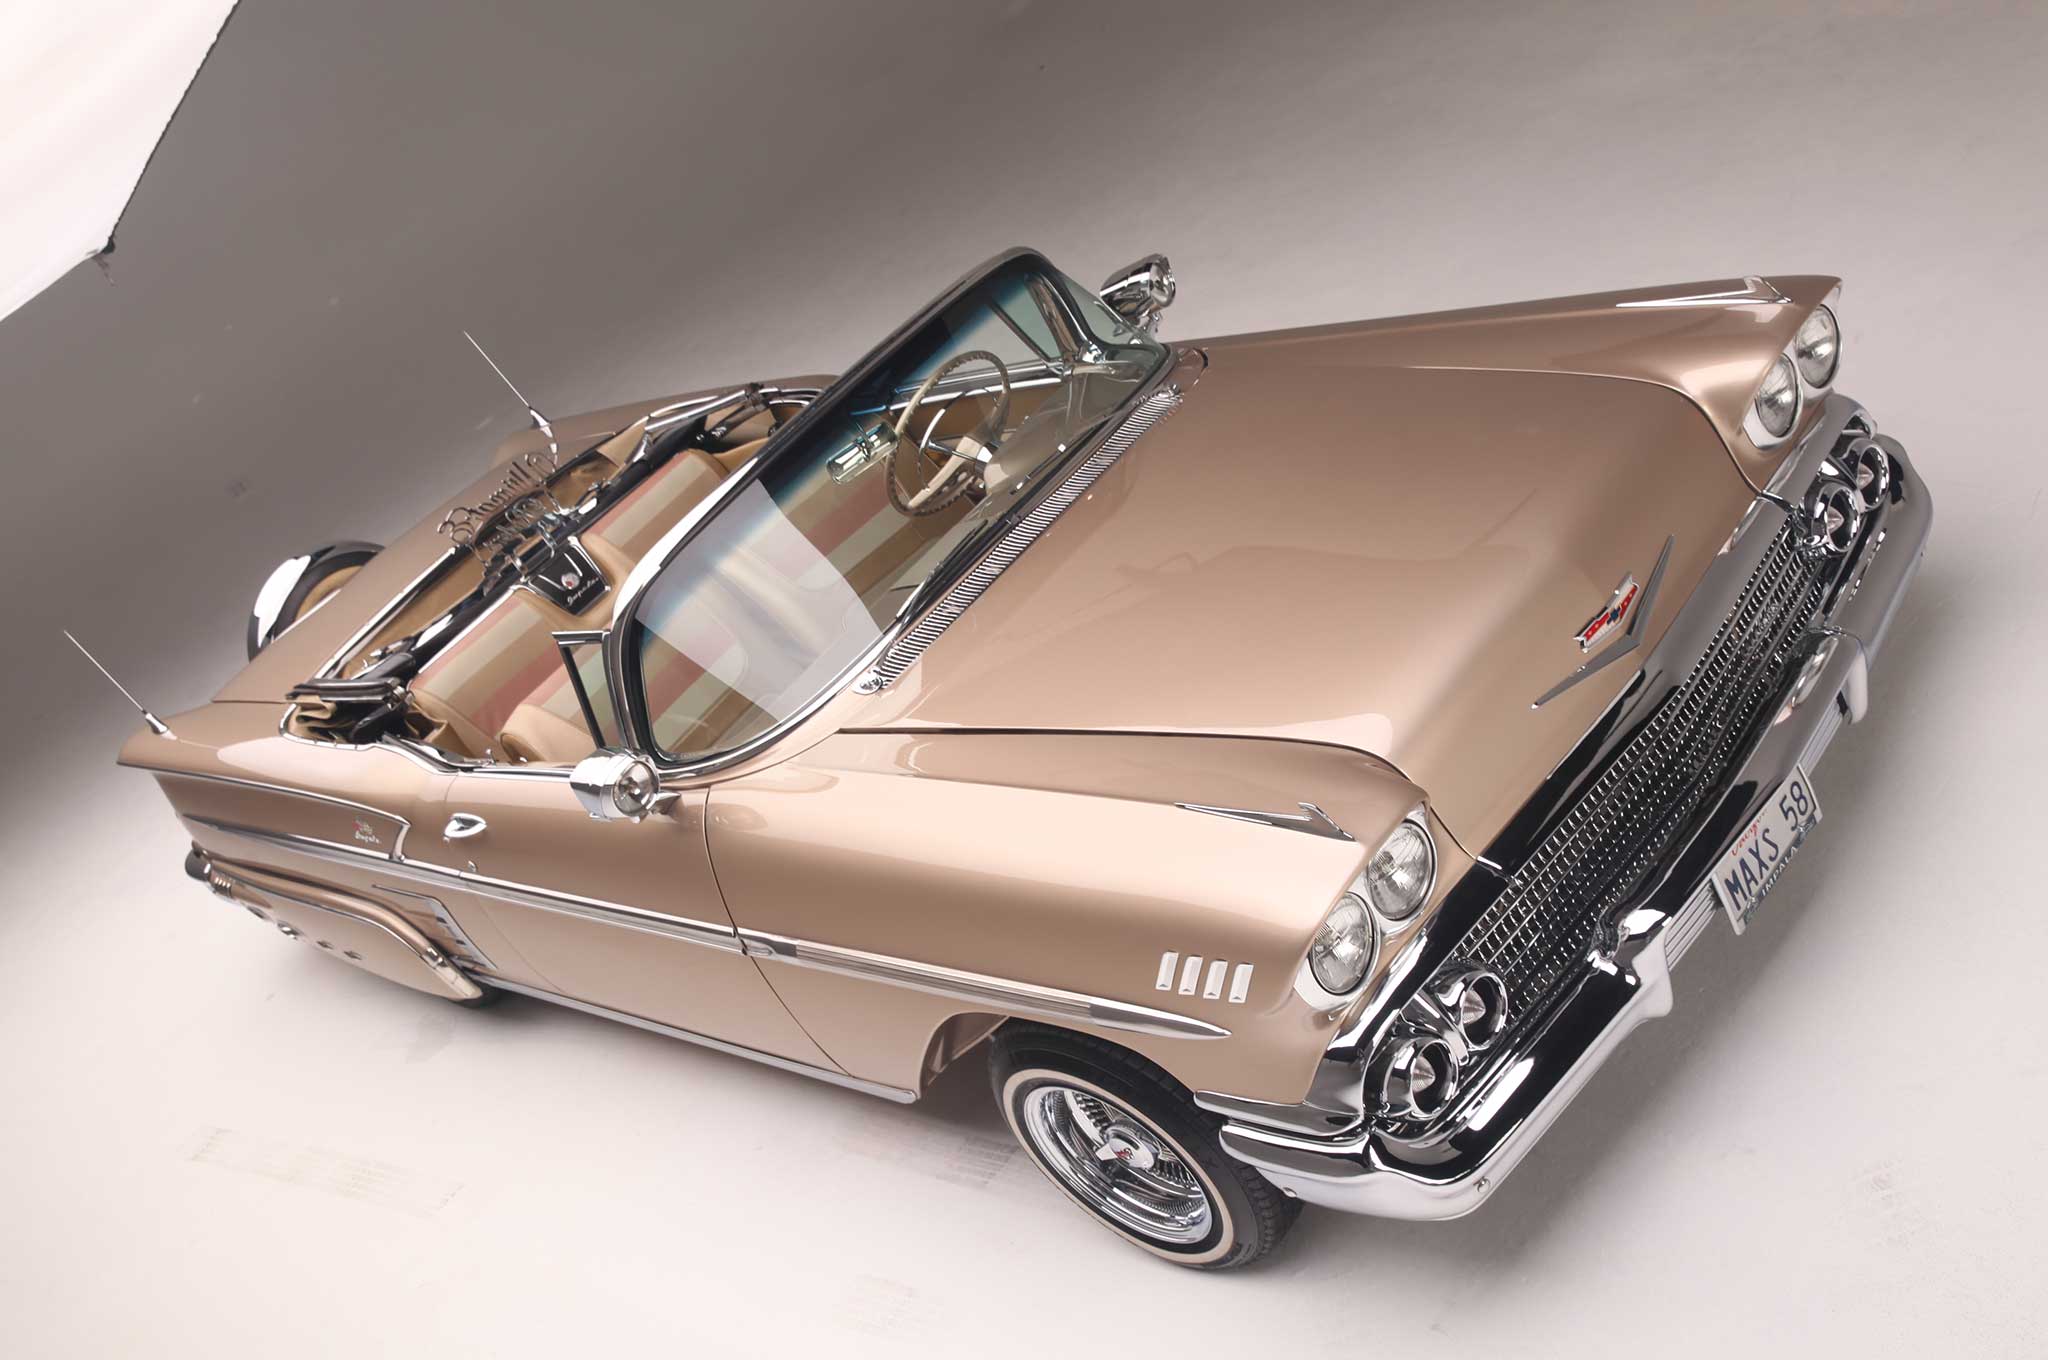 vehicles, 1958 chevrolet impala, lowrider, muscle car, chevrolet impala